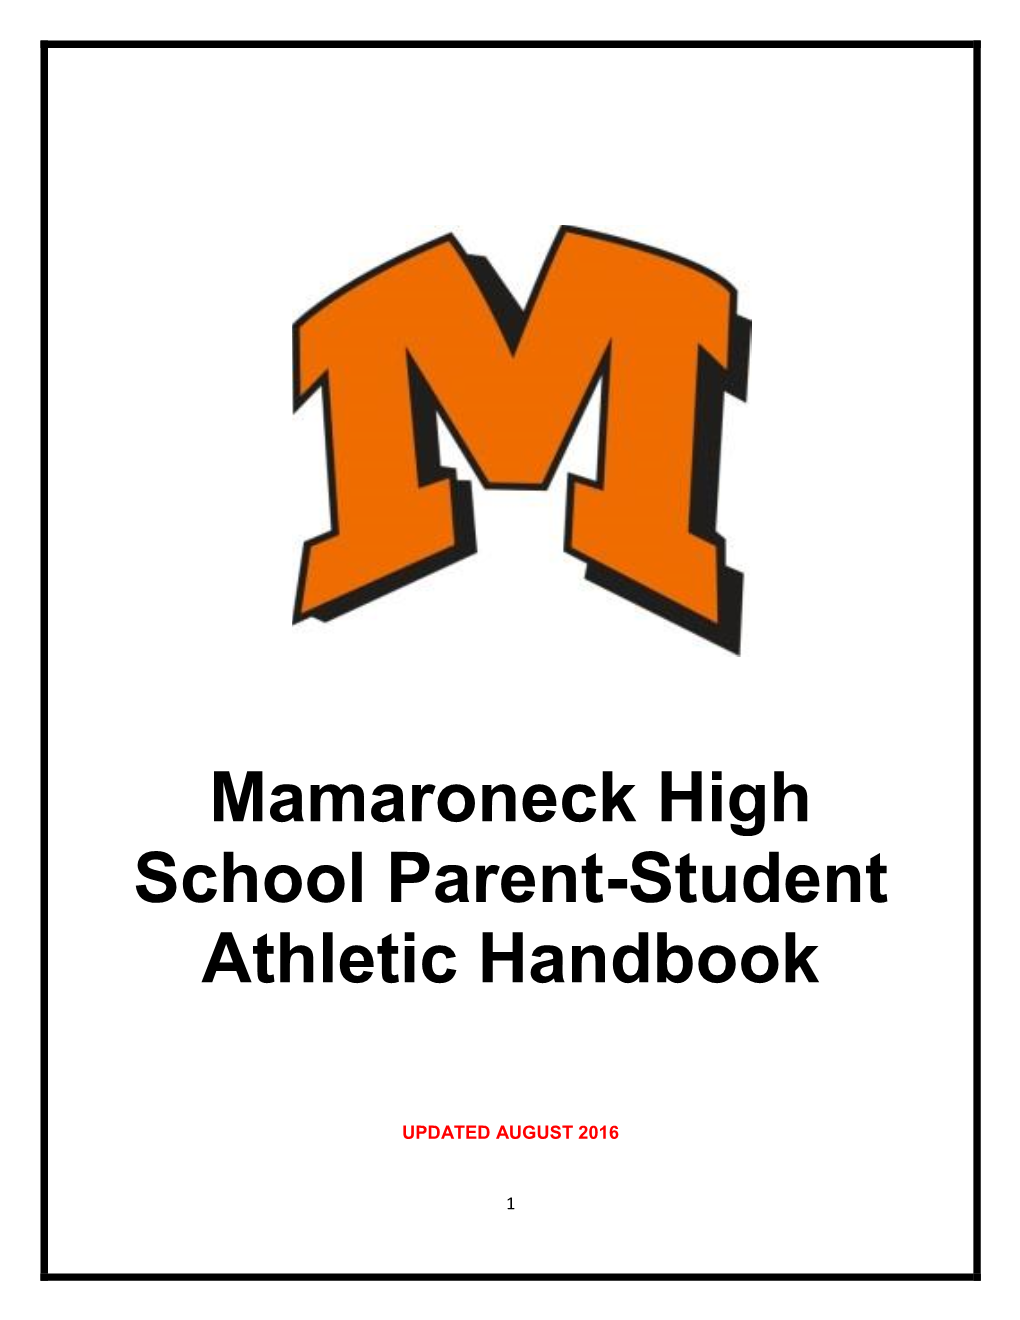 Mamaroneck High School Parent-Student Athletic Handbook